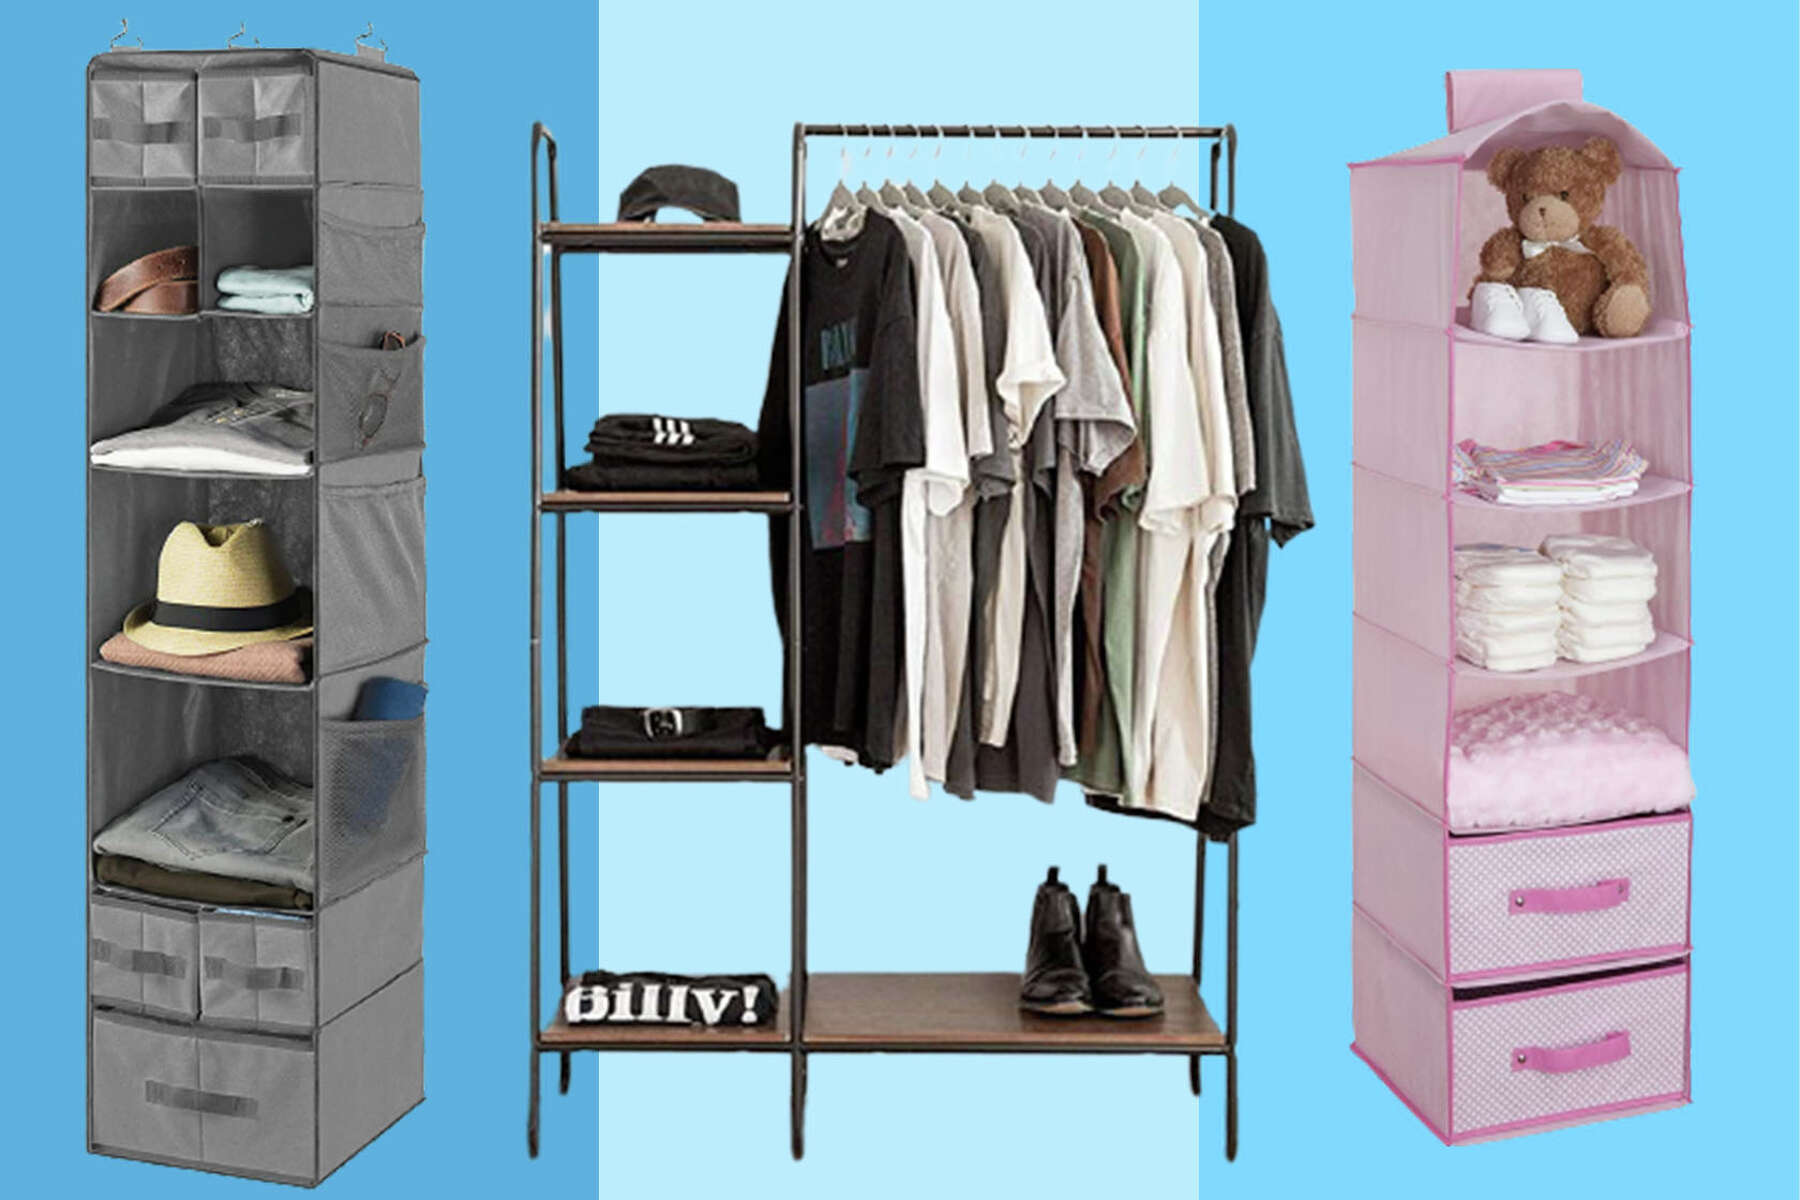 Smirly Hanging Closet Organizer Shelves. Grey 6 Shelf Closet Storage with 5 Clothes Organizer Drawers and Purpose Made